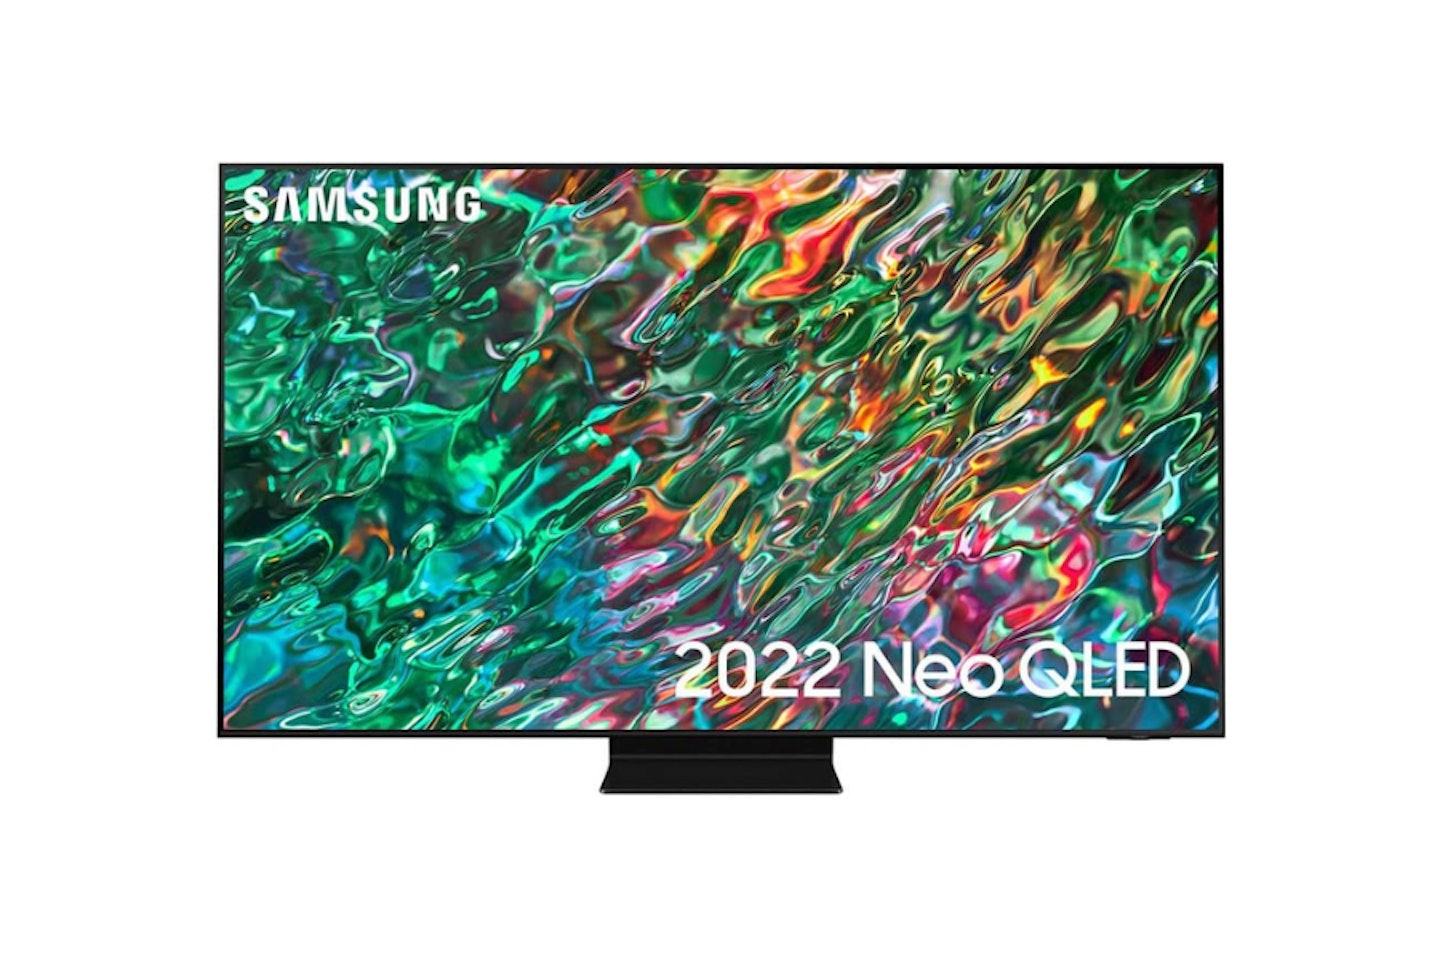 Samsung QN90B Neo QLED 4K Smart TV